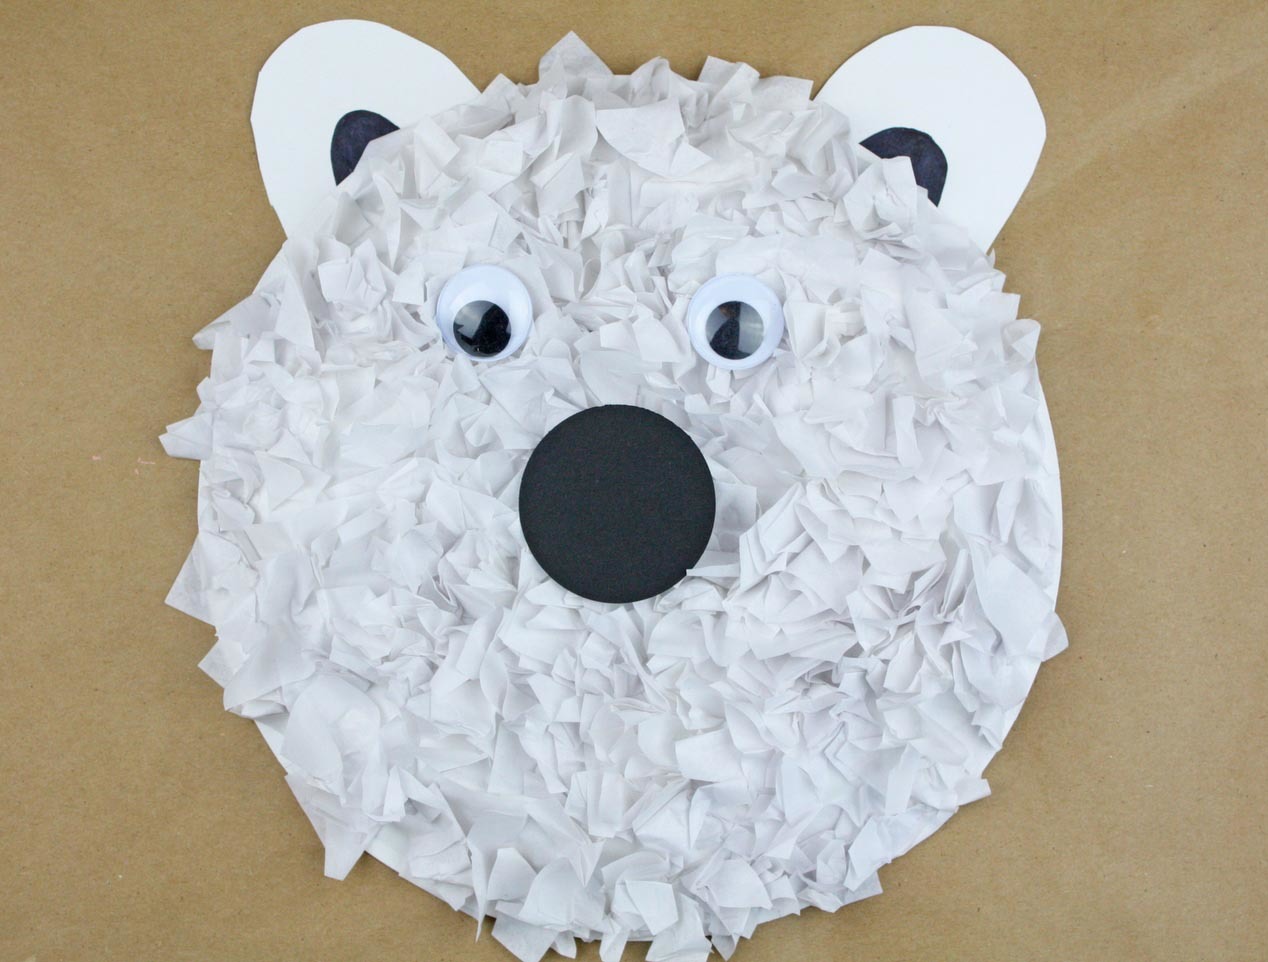 Paper Plate Polar Bear Craft